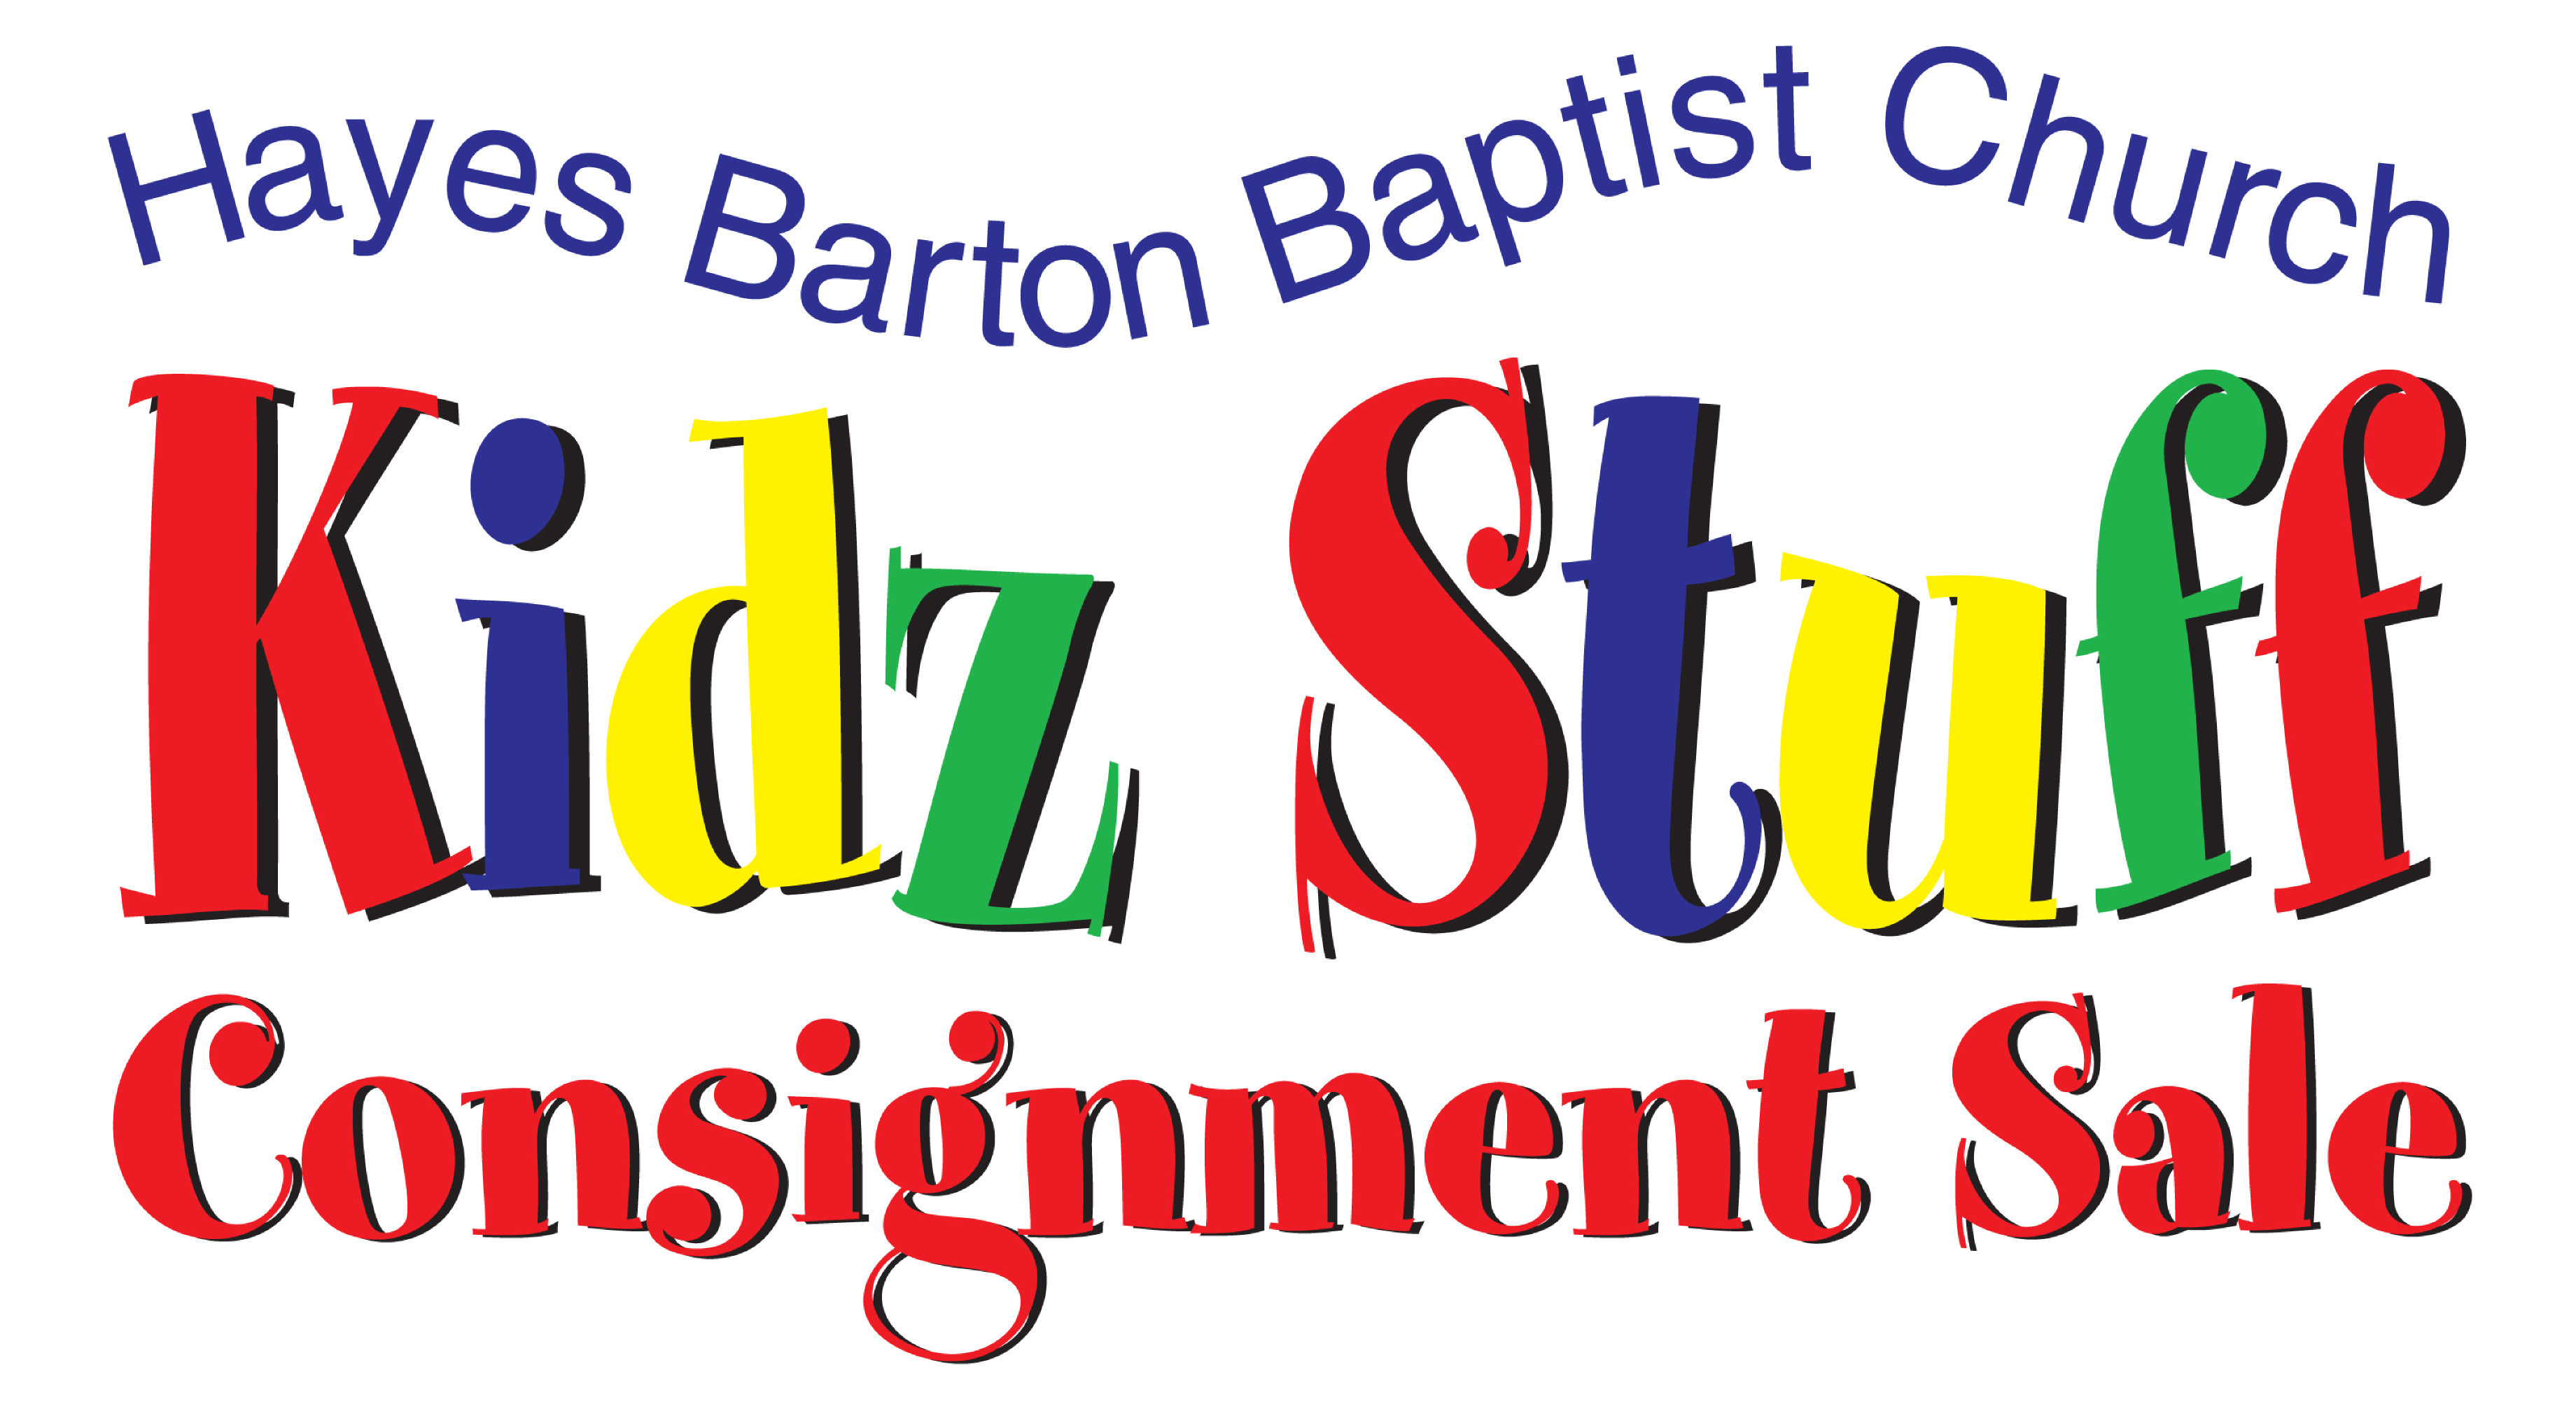 Sponsor Hayes Barton Baptist Church Kidz Stuff Consignment Sale